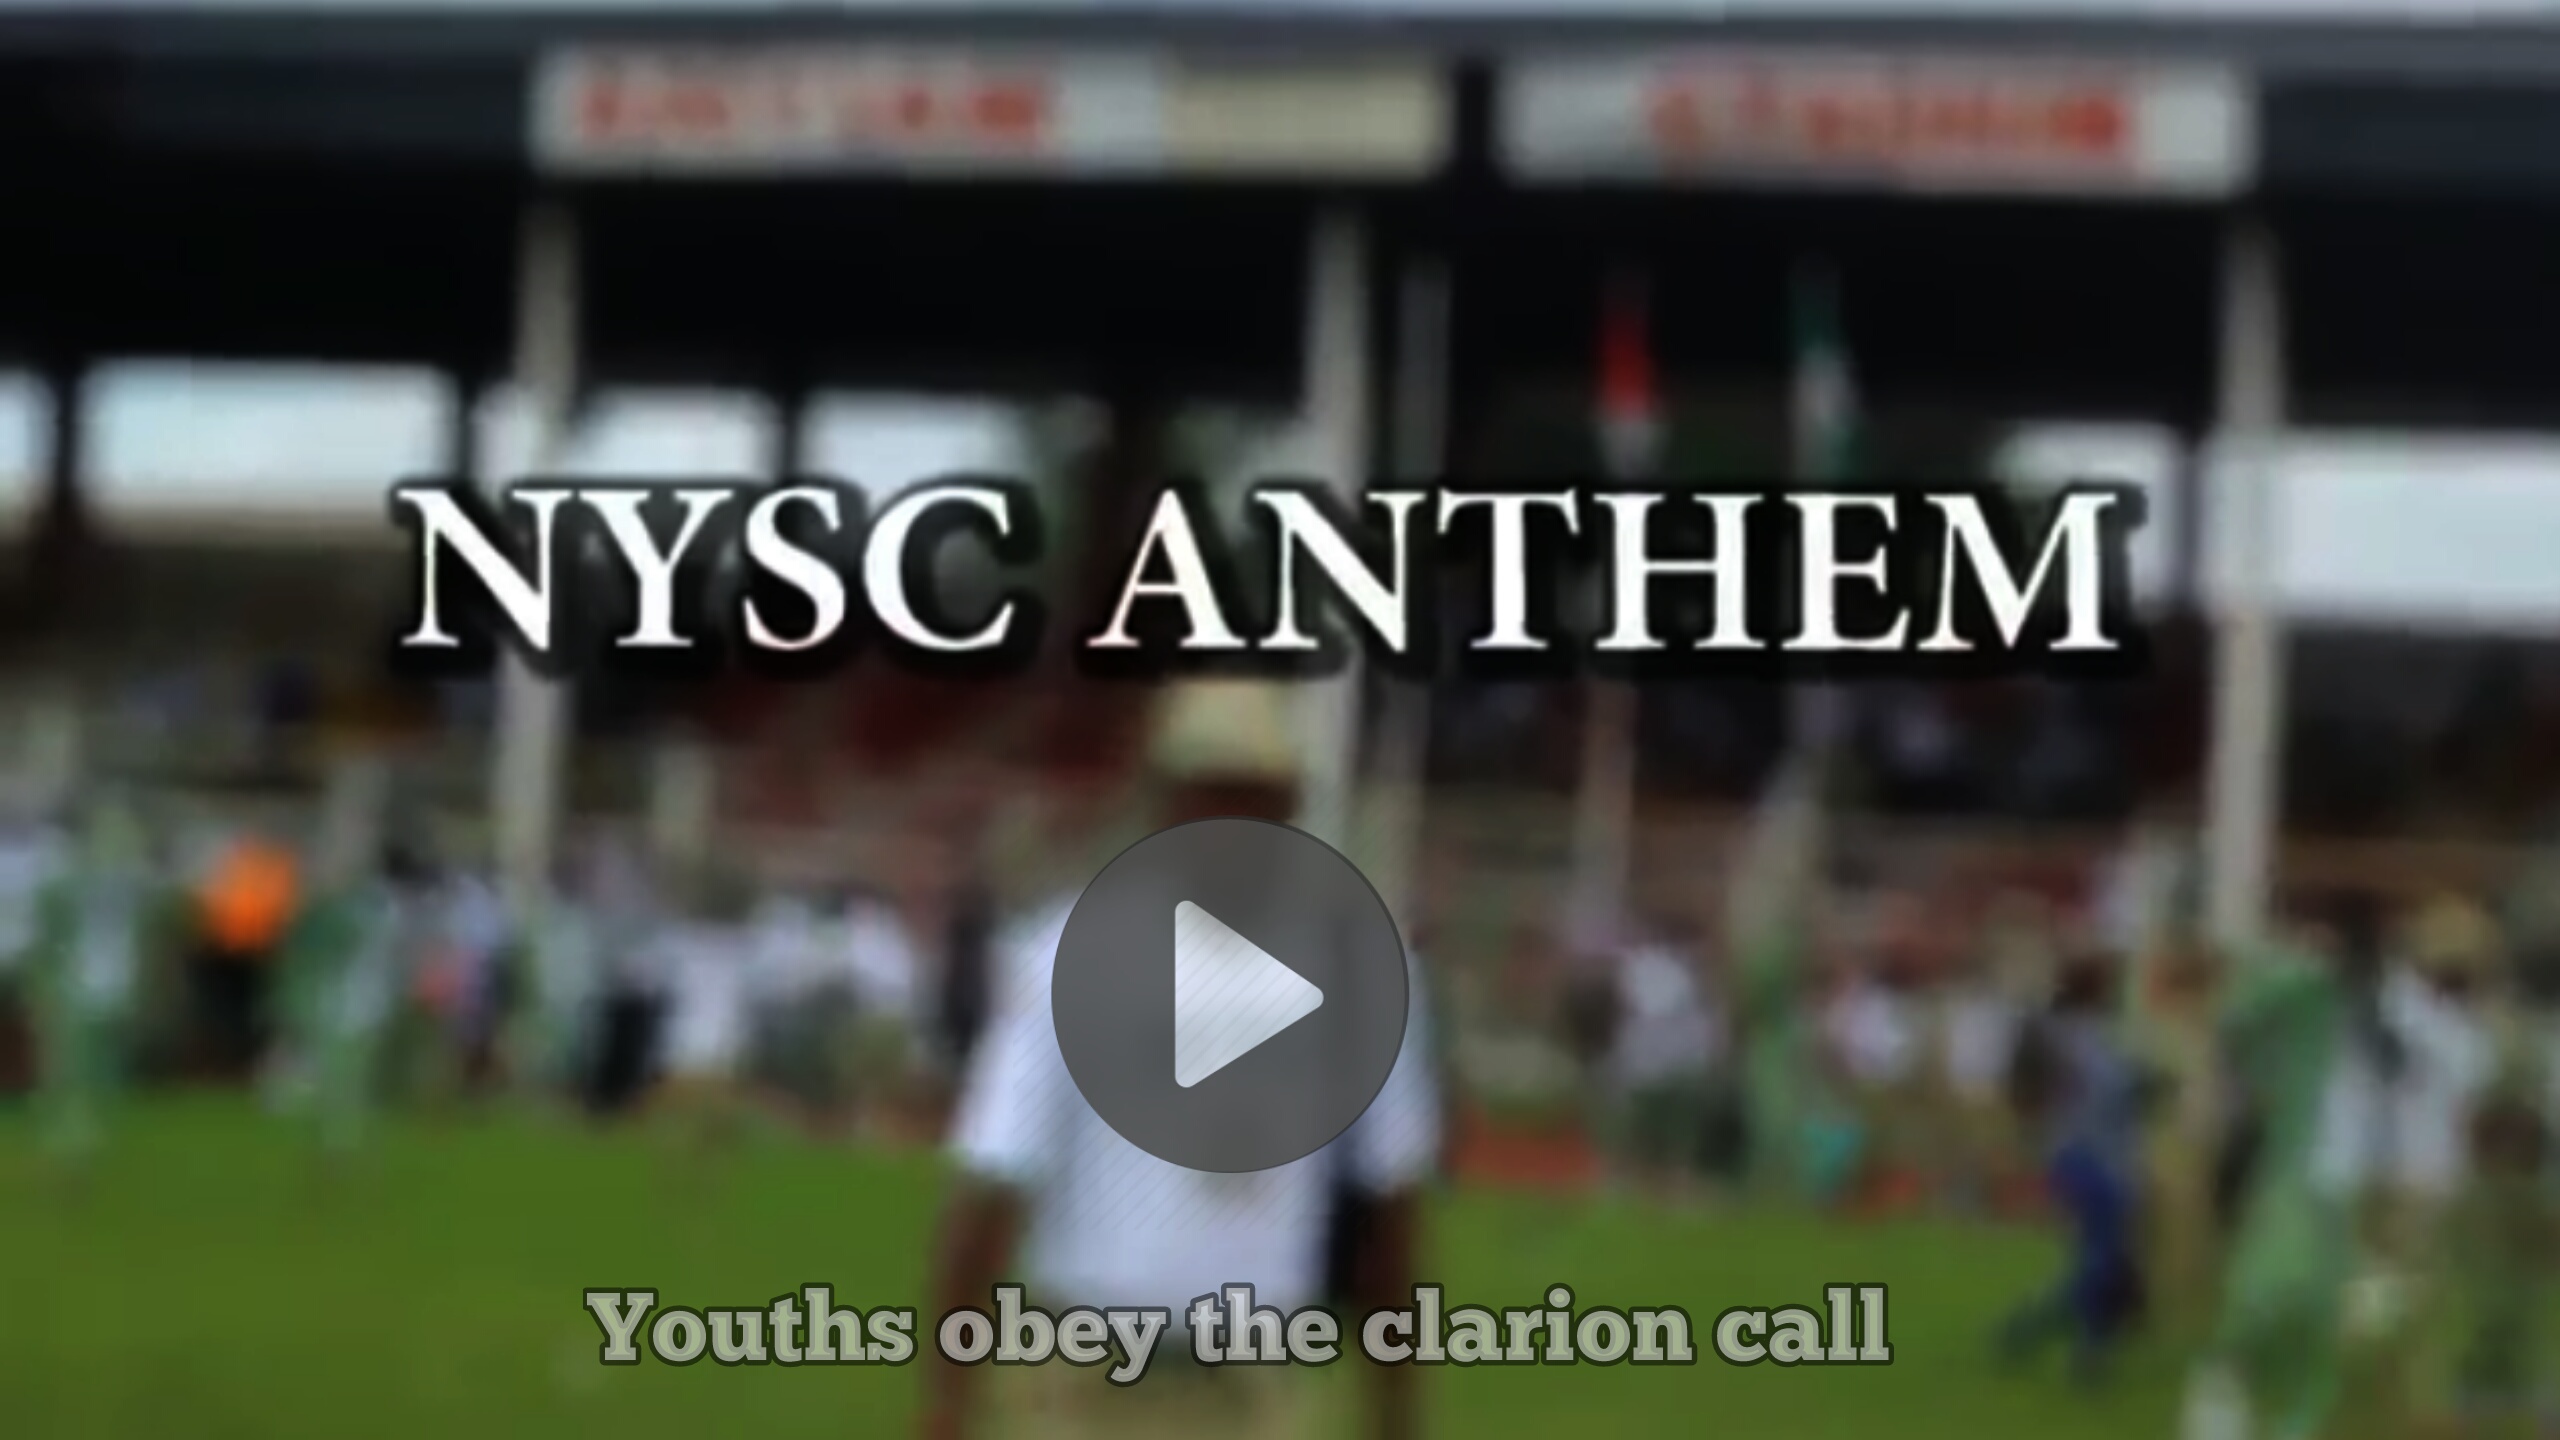 NYSC anthem, lyrics, video and audio (download)